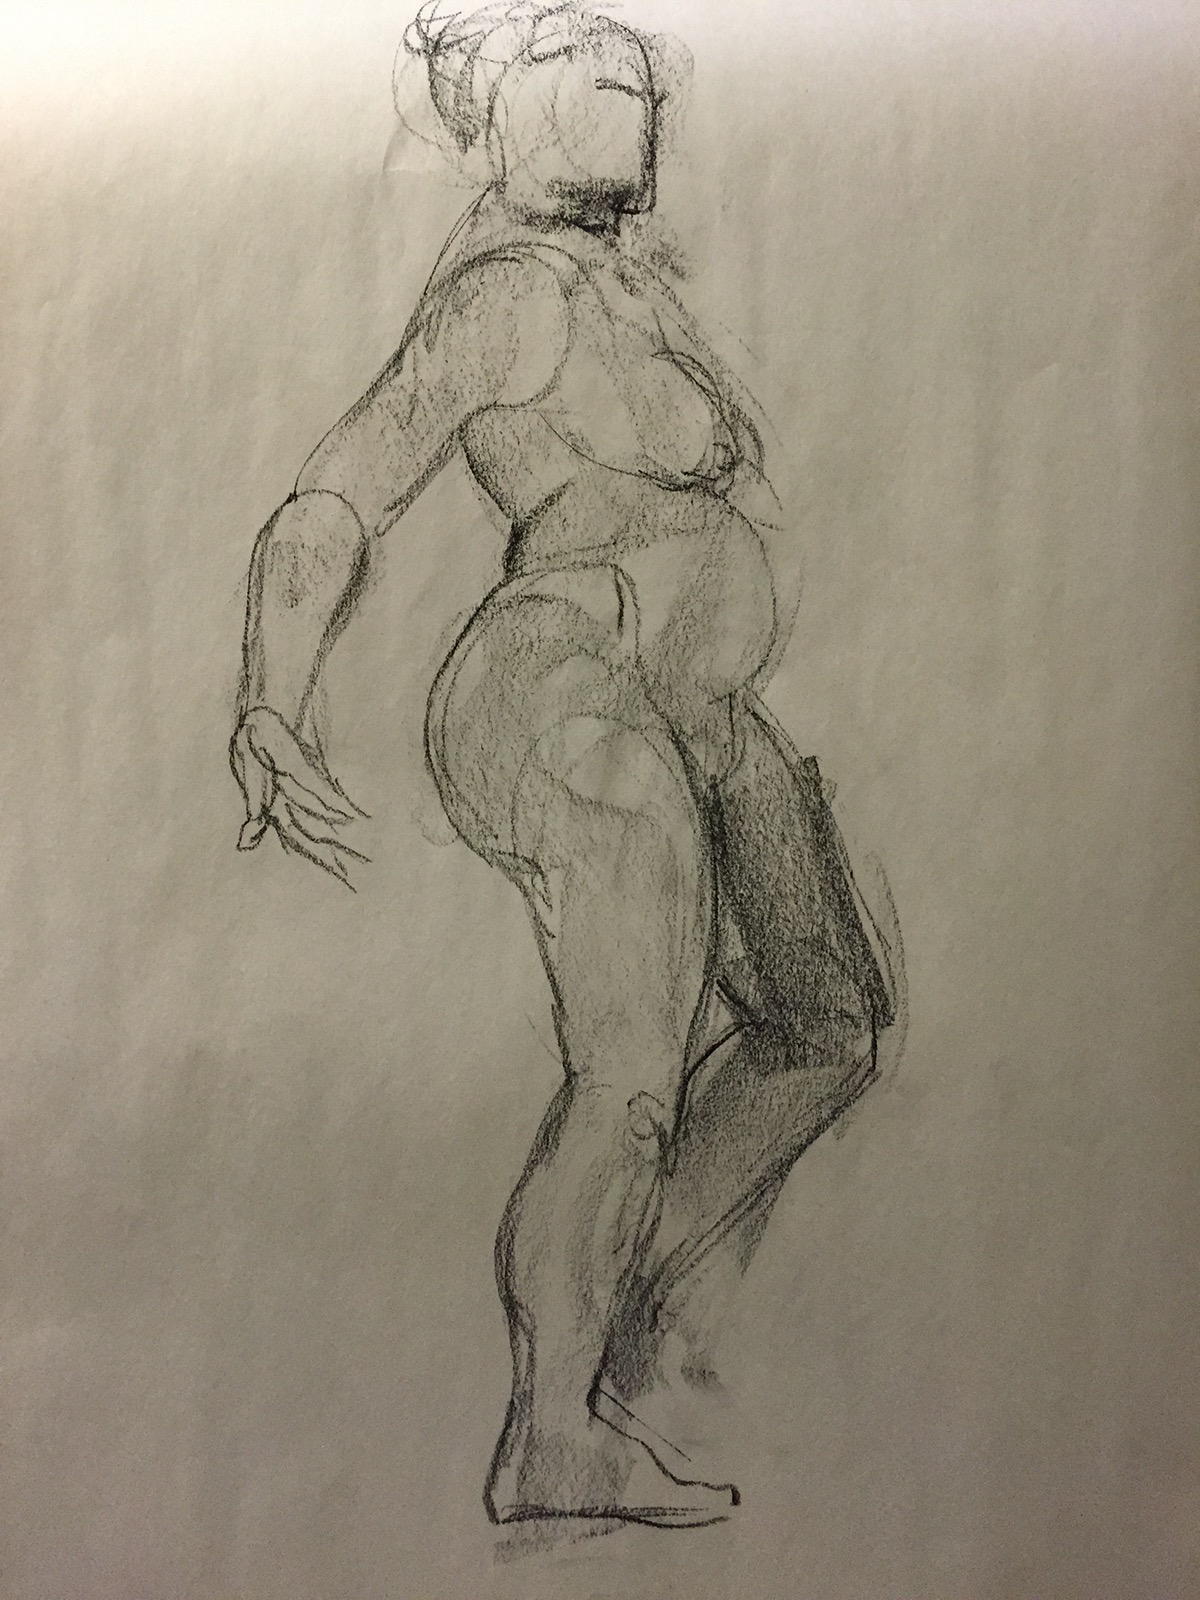 croquis figure drawings studies human forms